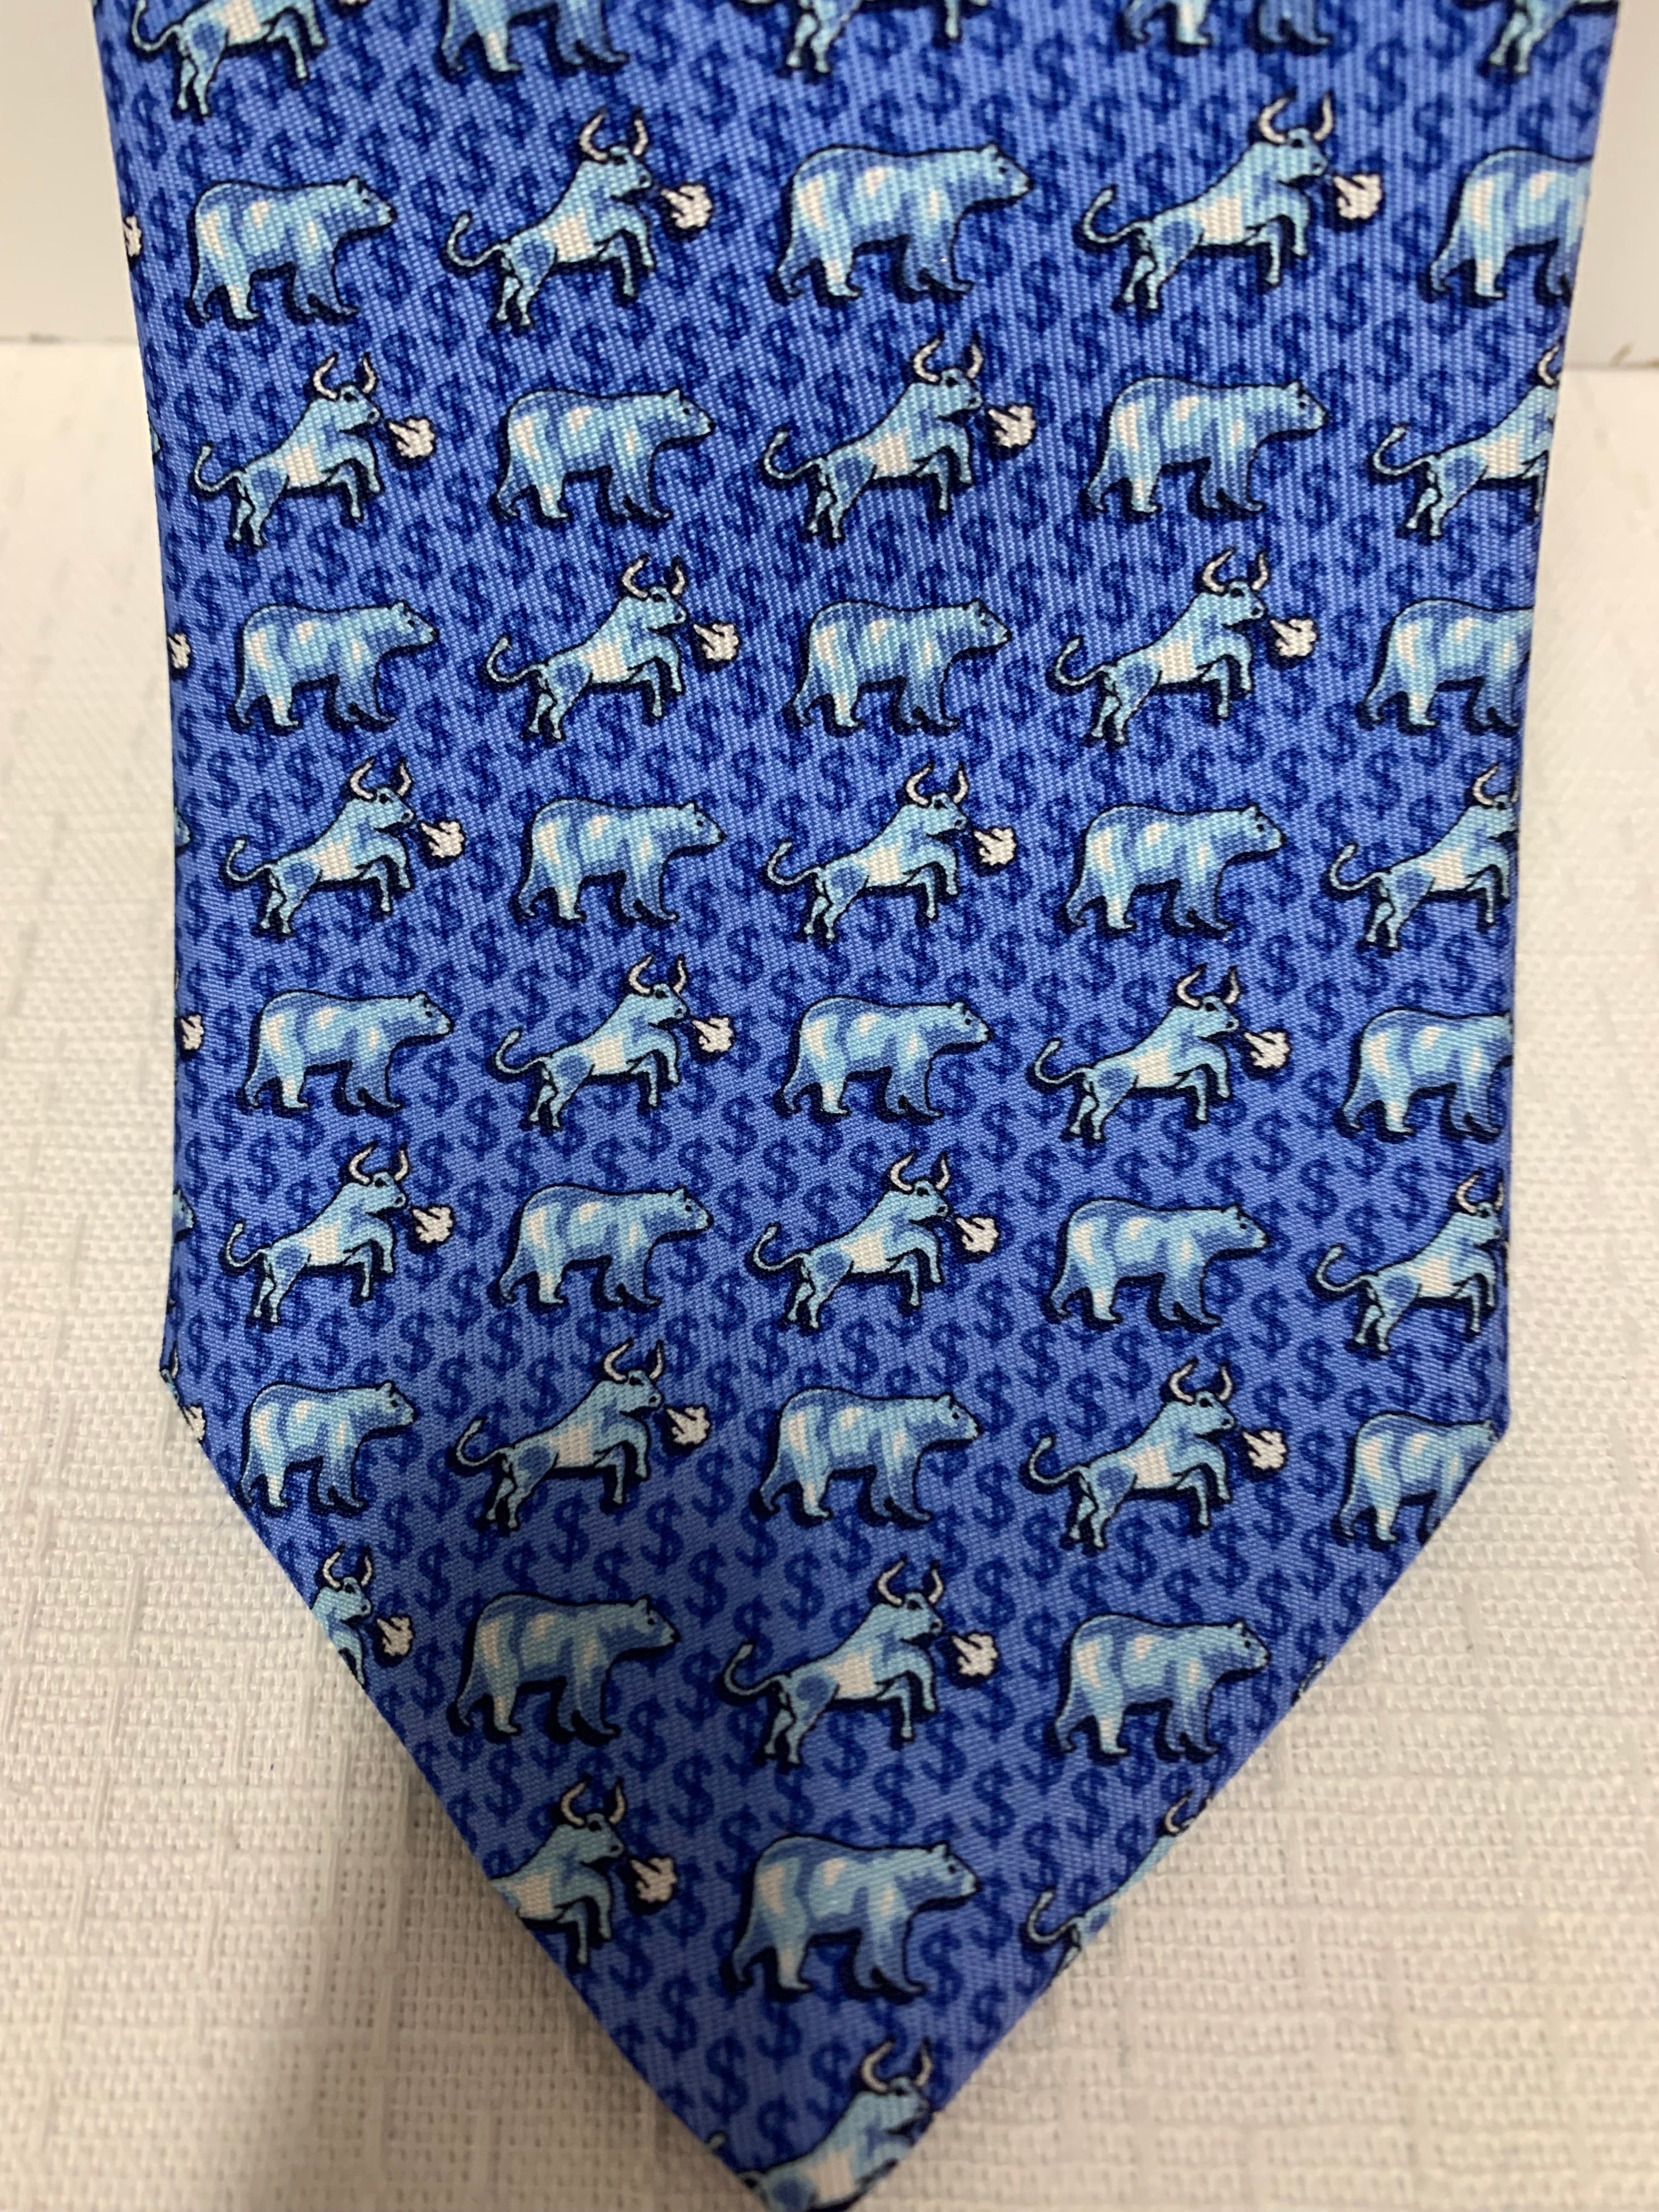 Vineyard Vines Men's Silk Neck Tie Natixis Blue Bull /  Bear Market